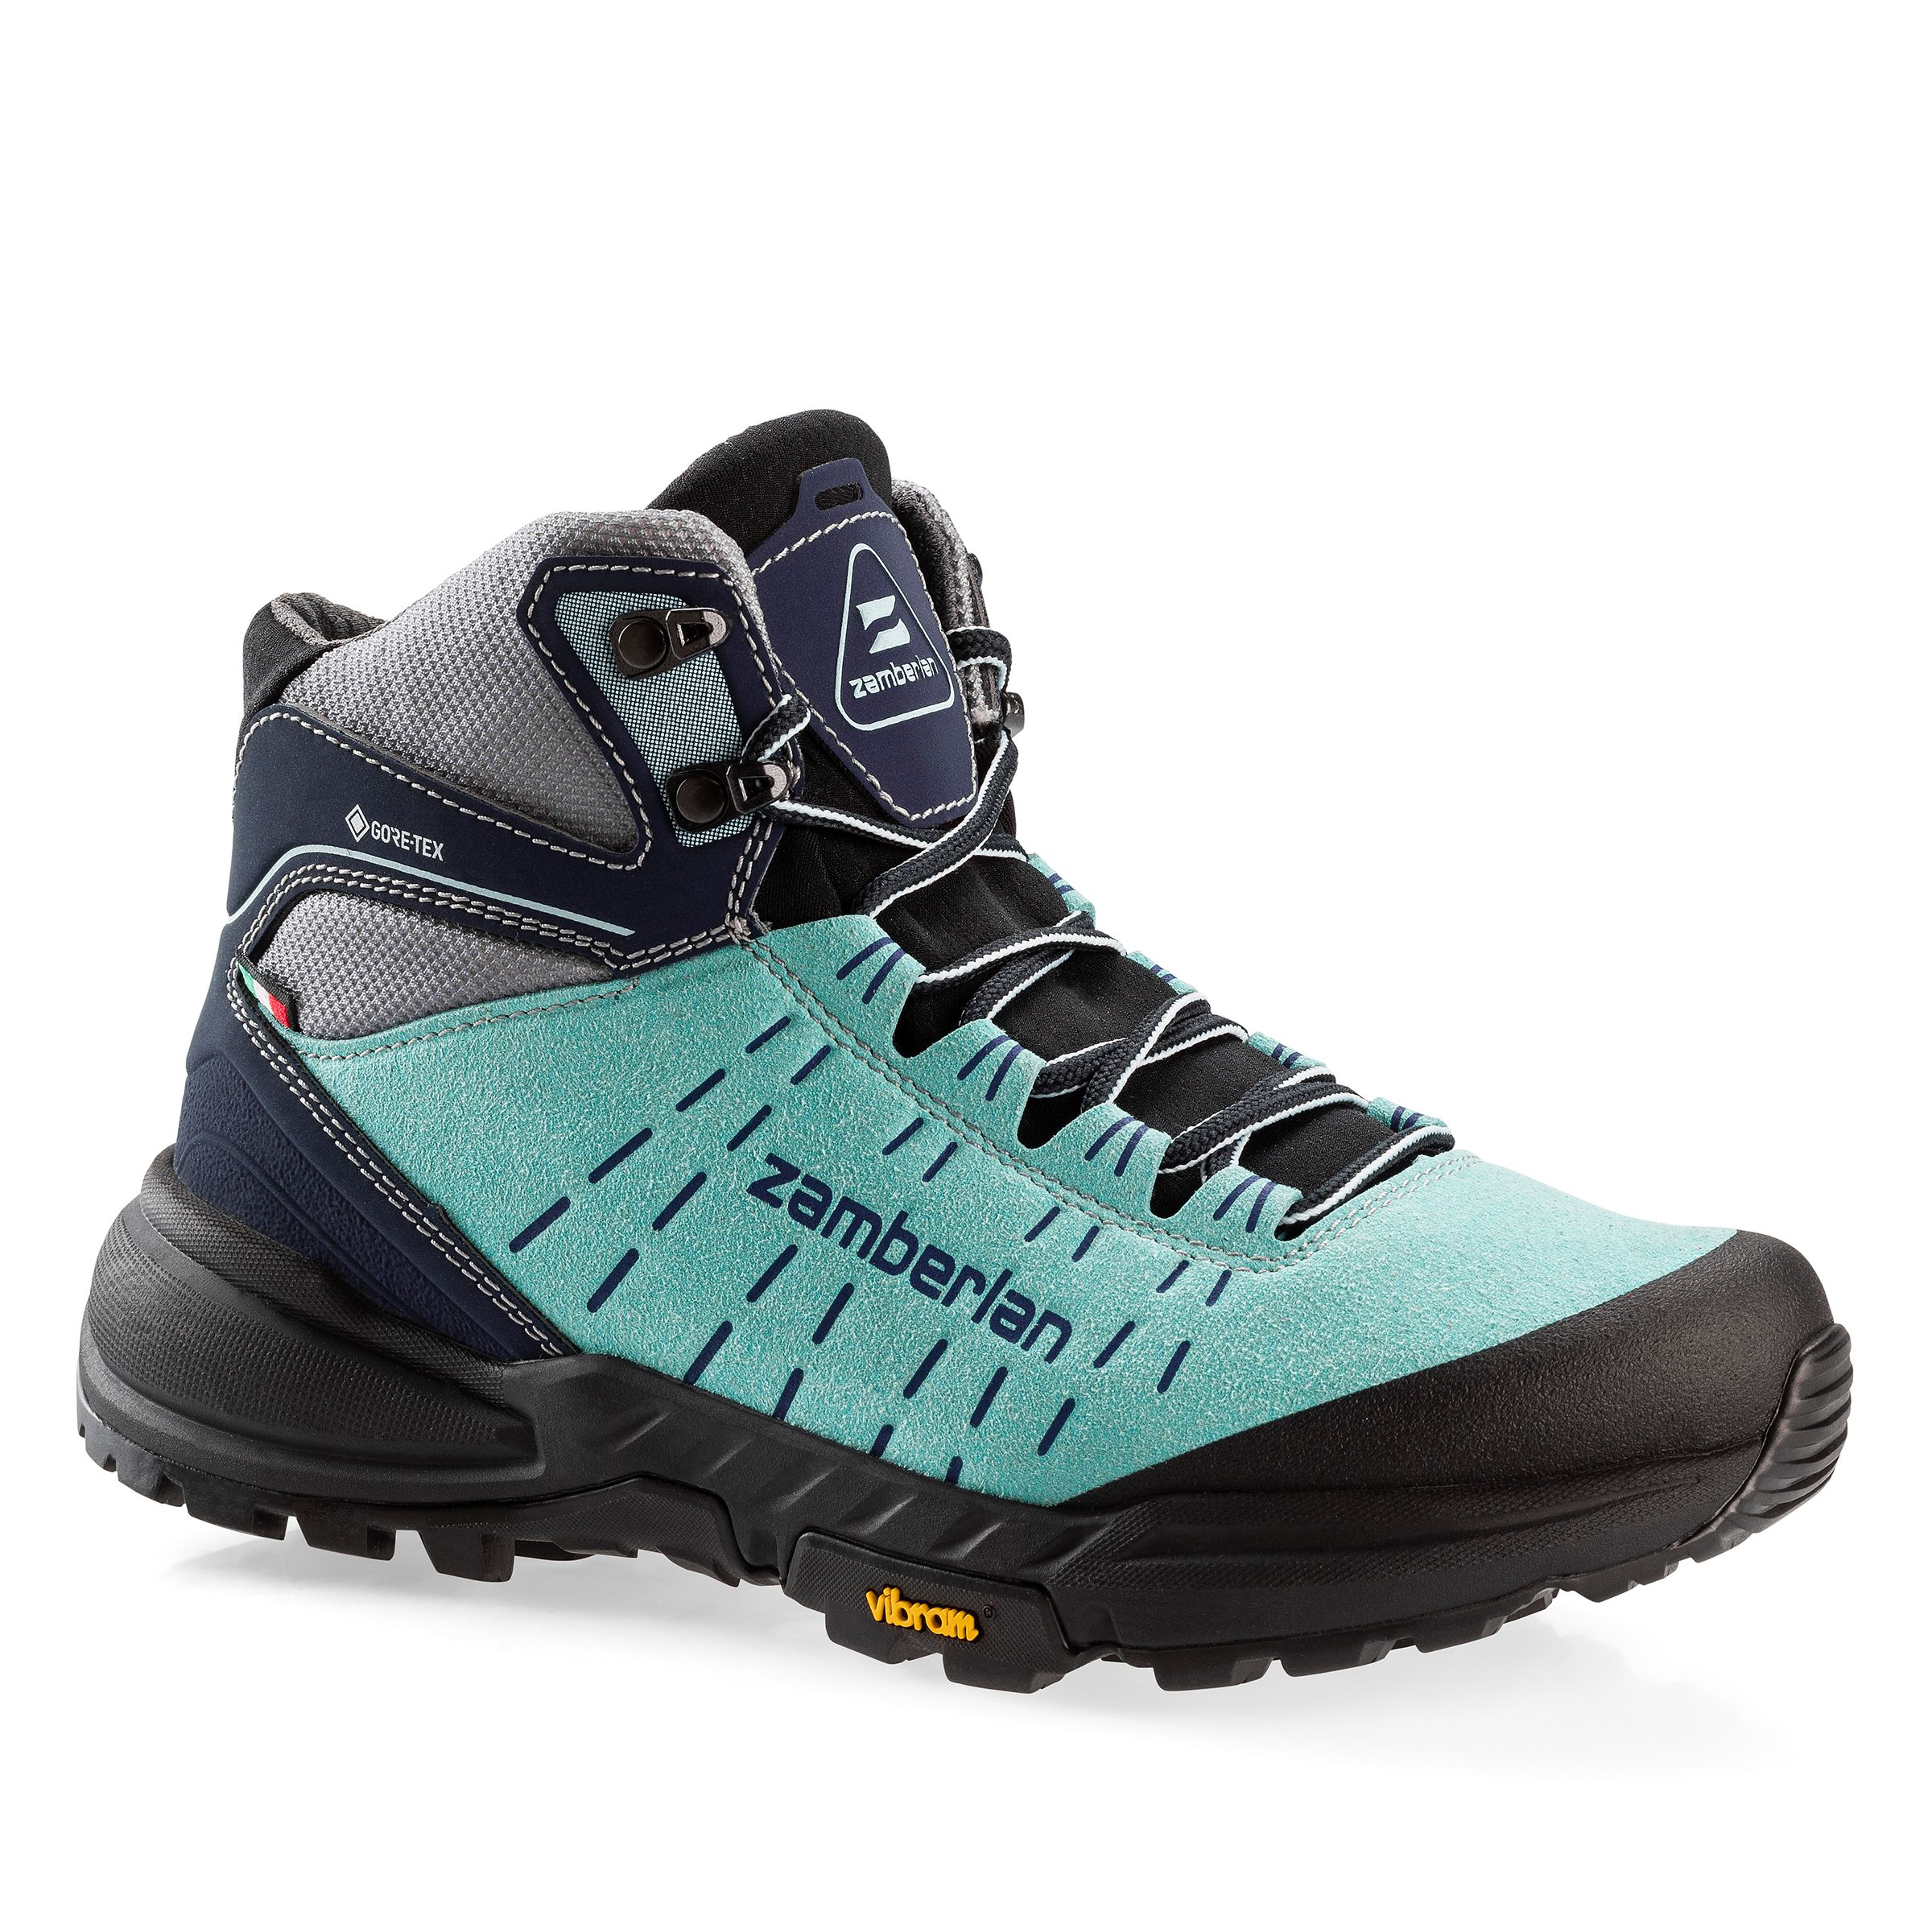 Zamberlan 334 Circe GTX Waterproof Hiking Boots for Ladies - Blue - 10M